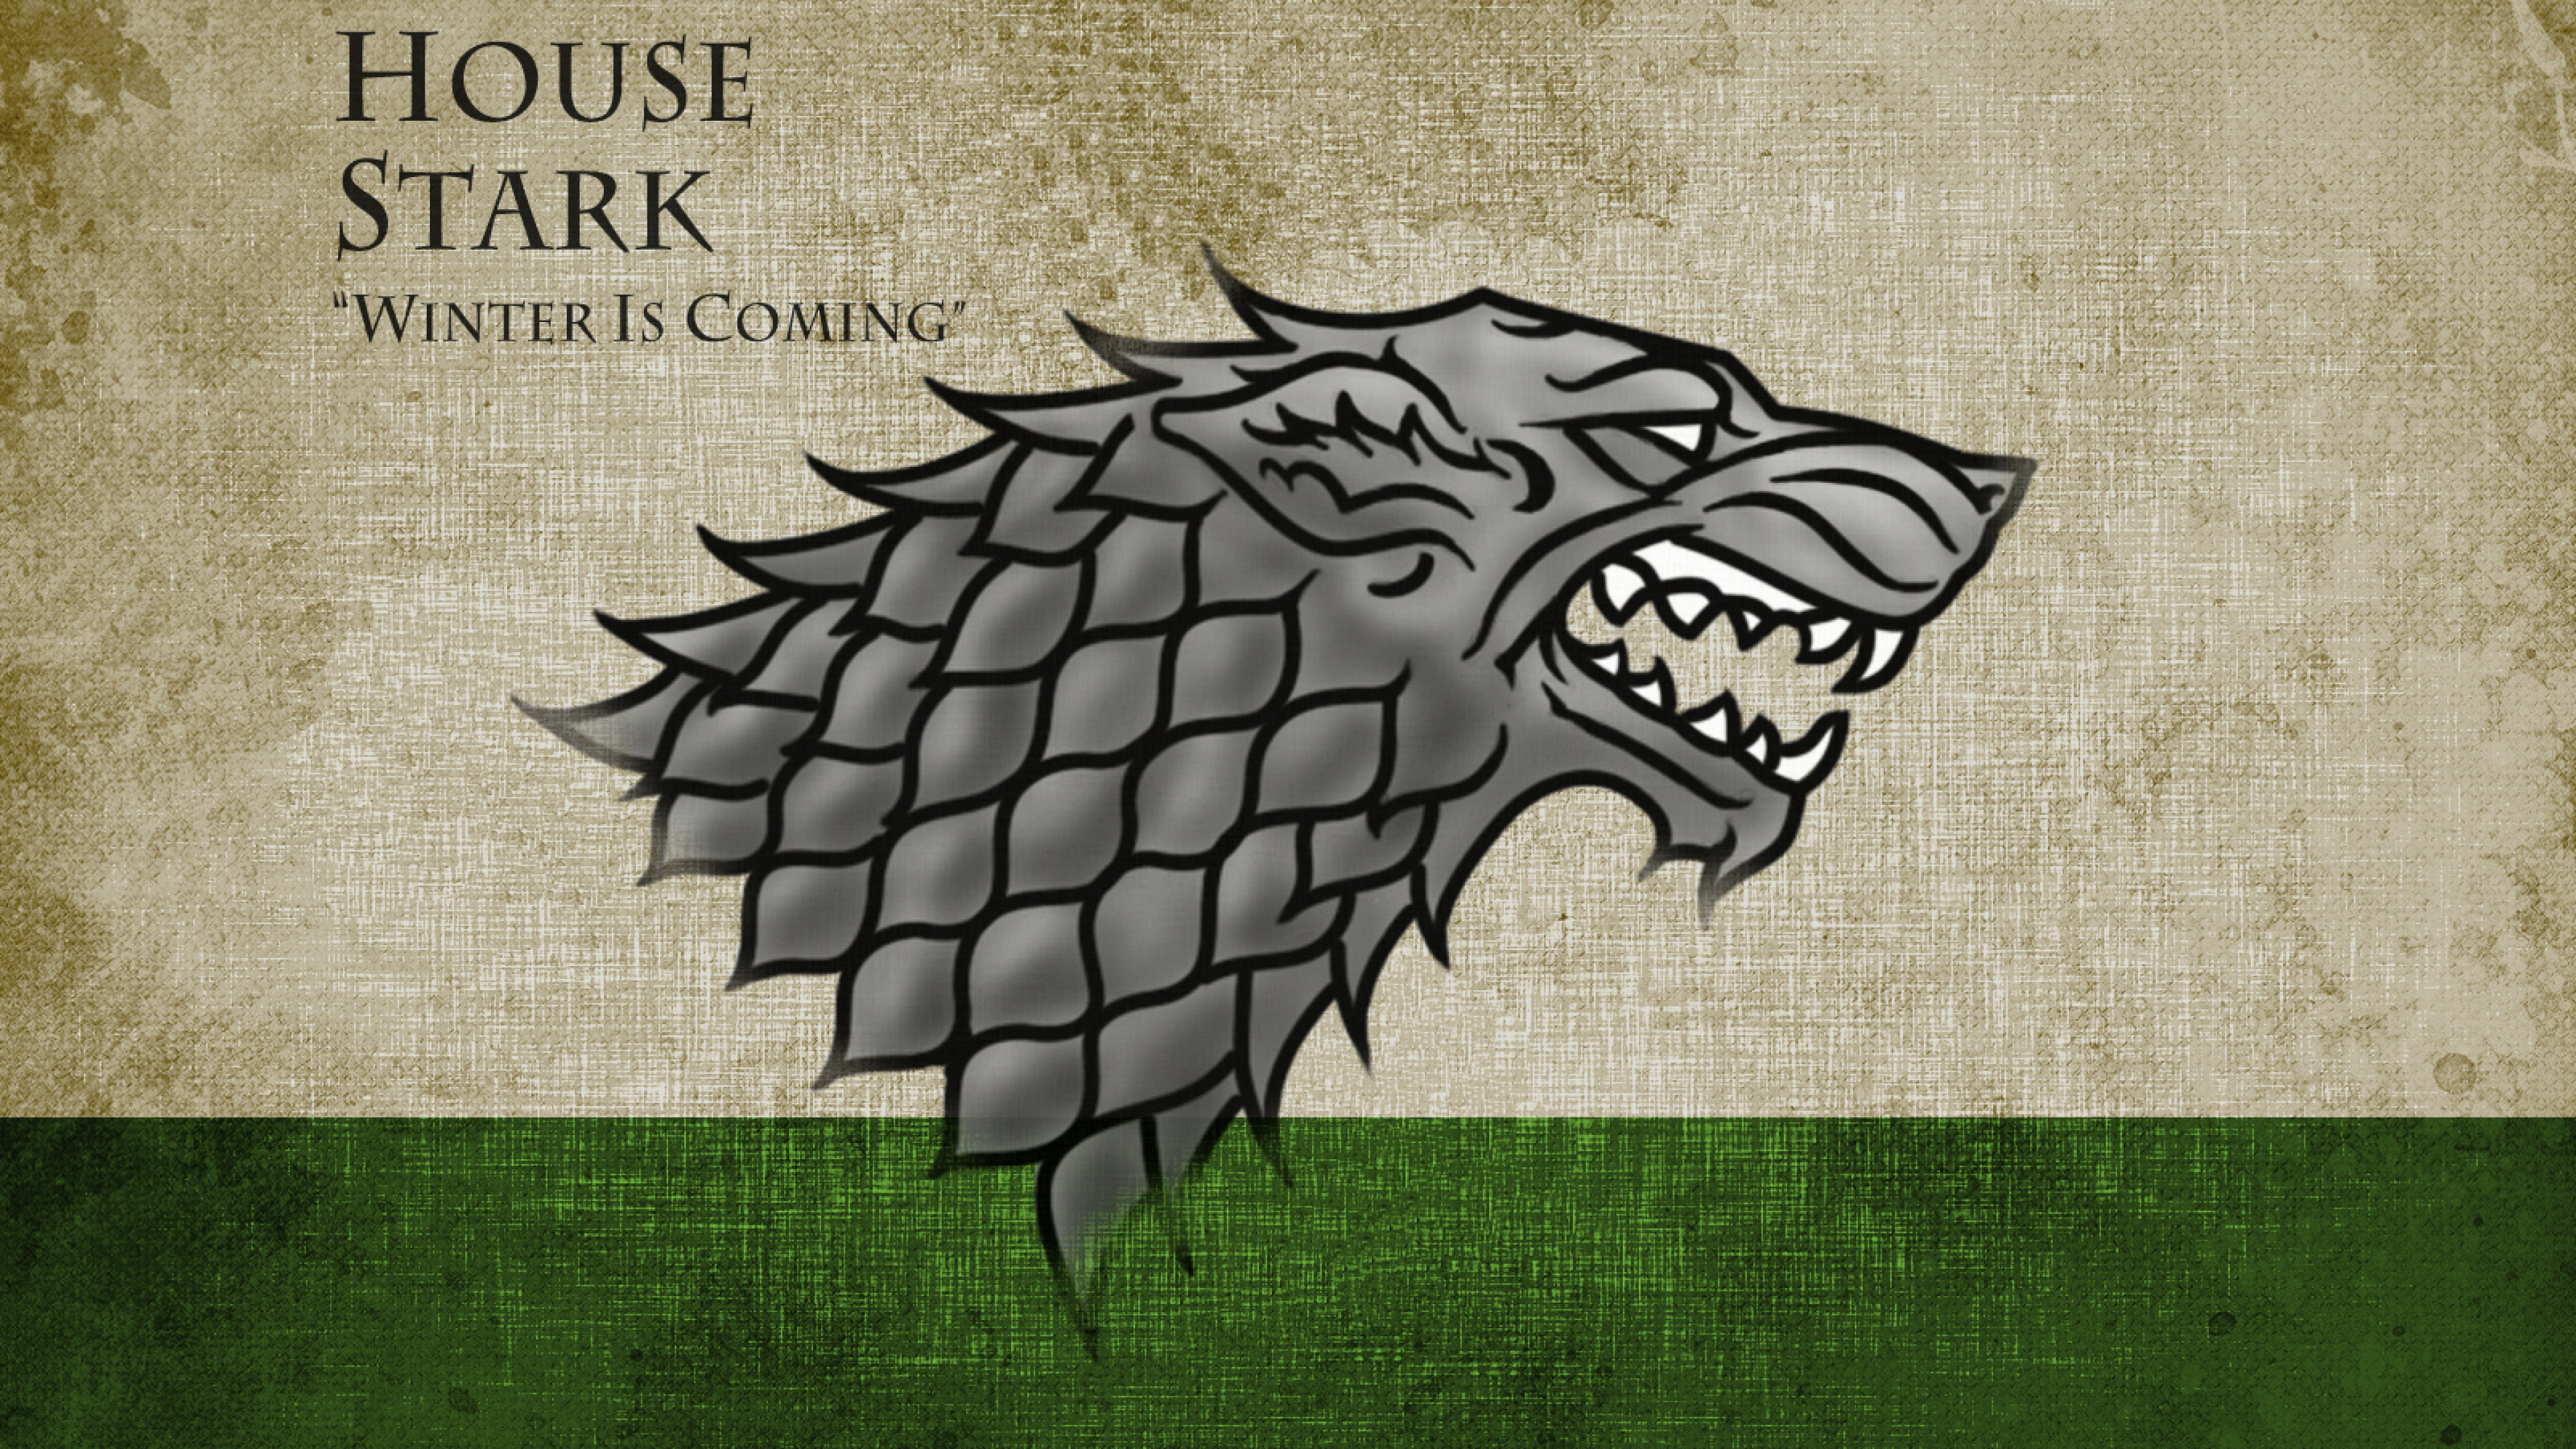 Stark Logo Game Of Thrones Carve  Free photo on Pixabay  Pixabay